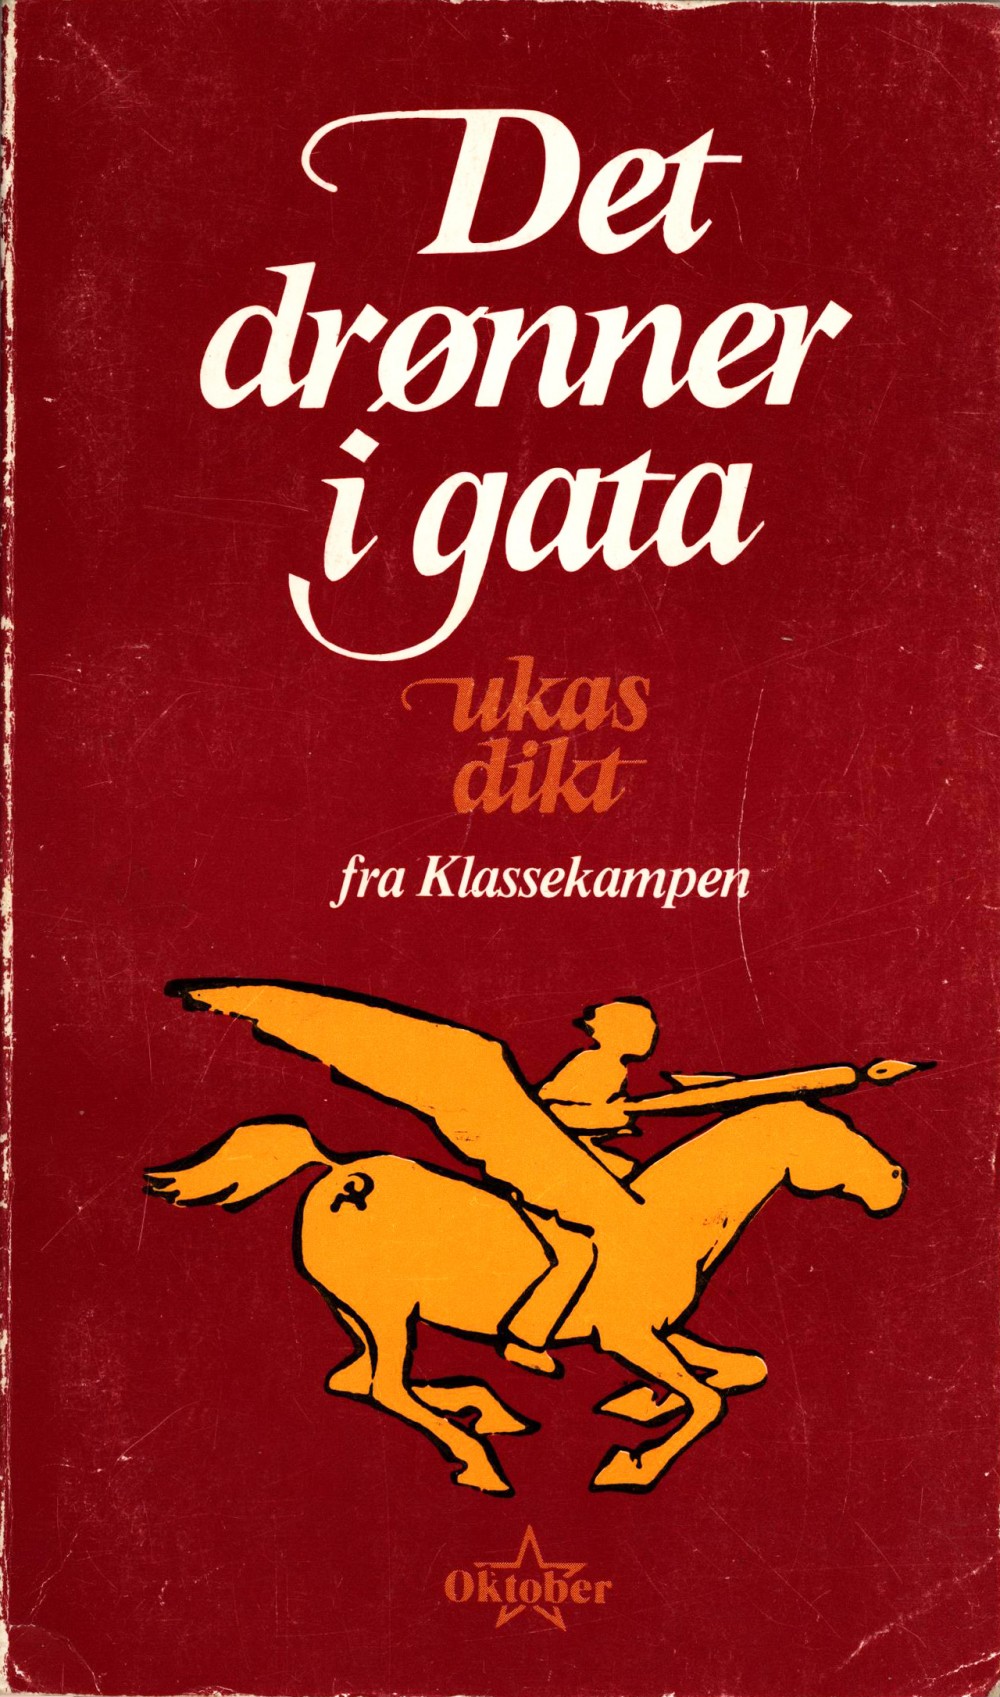 Det drønner i gata - Ukas dikt fra Klassekampen 1972-1976